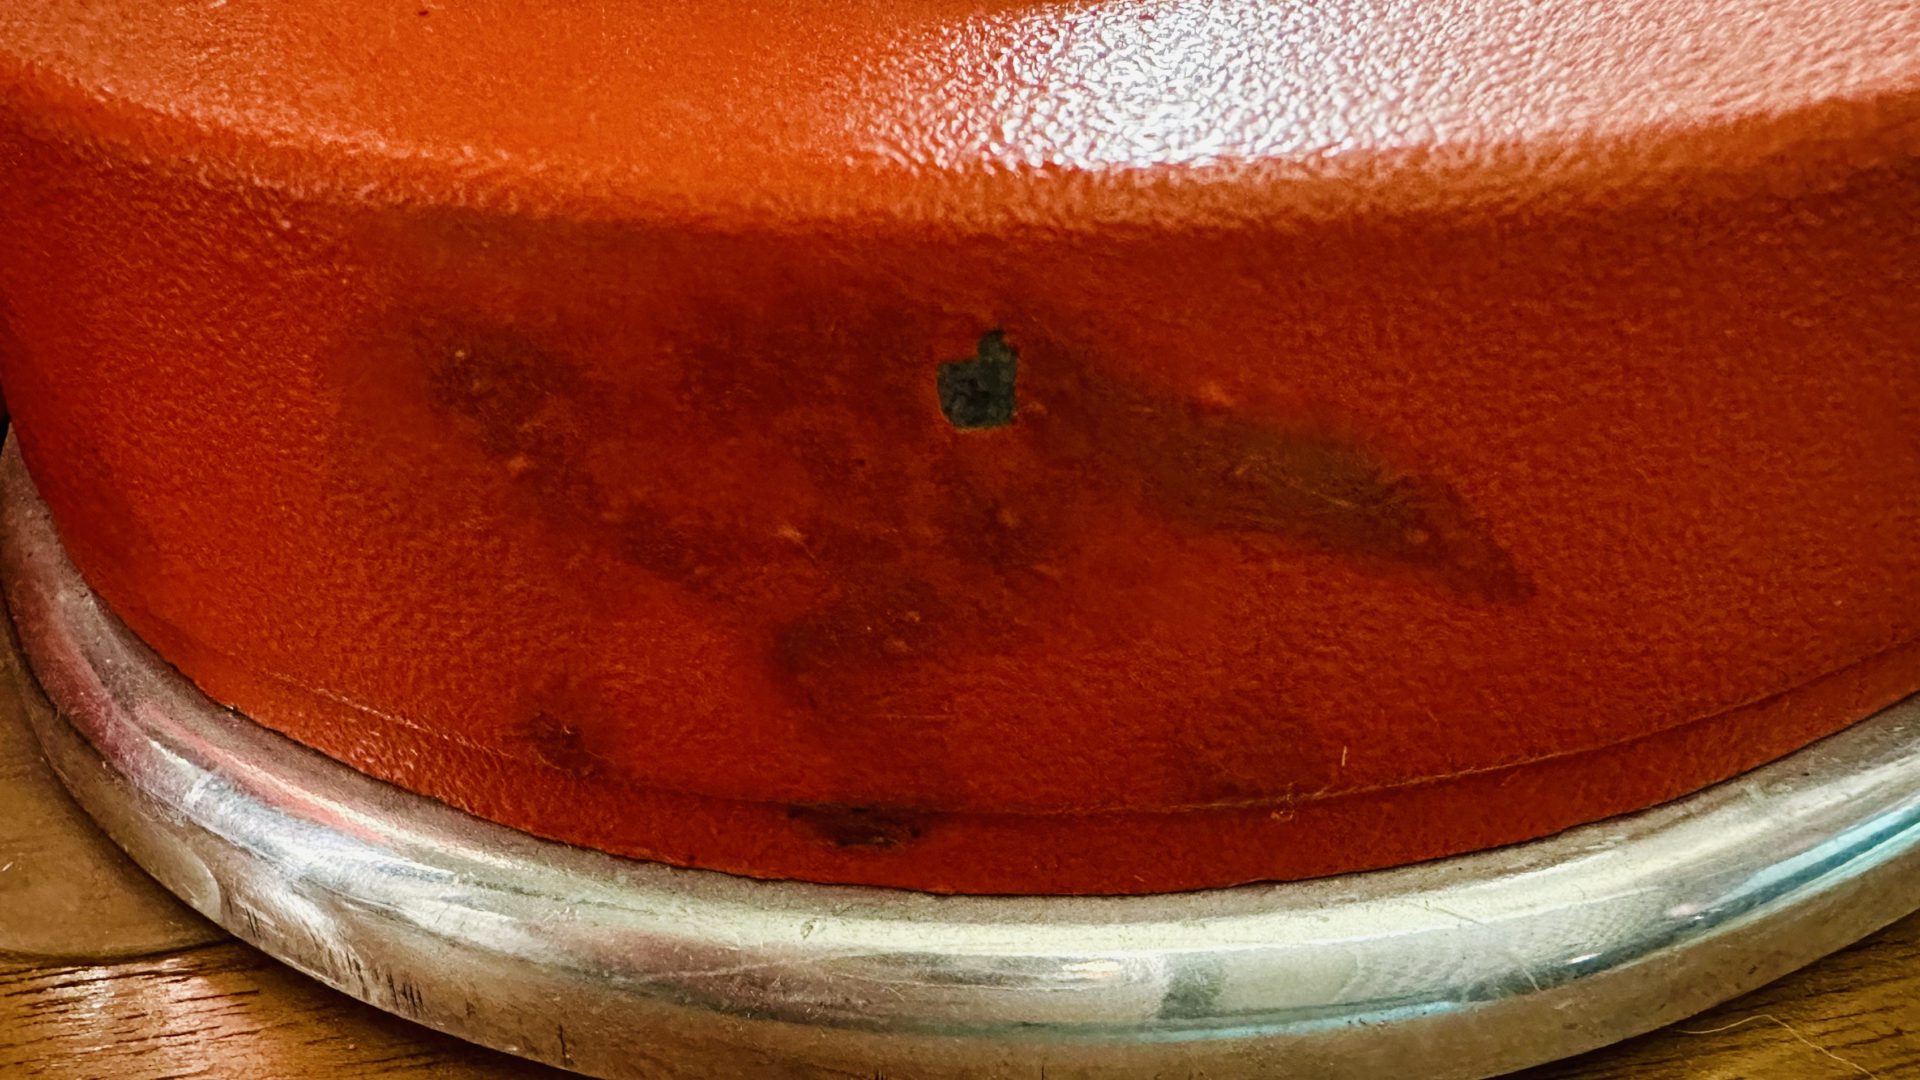 Arrarex Caravel Vintage Lever Espresso Machine Orange Color